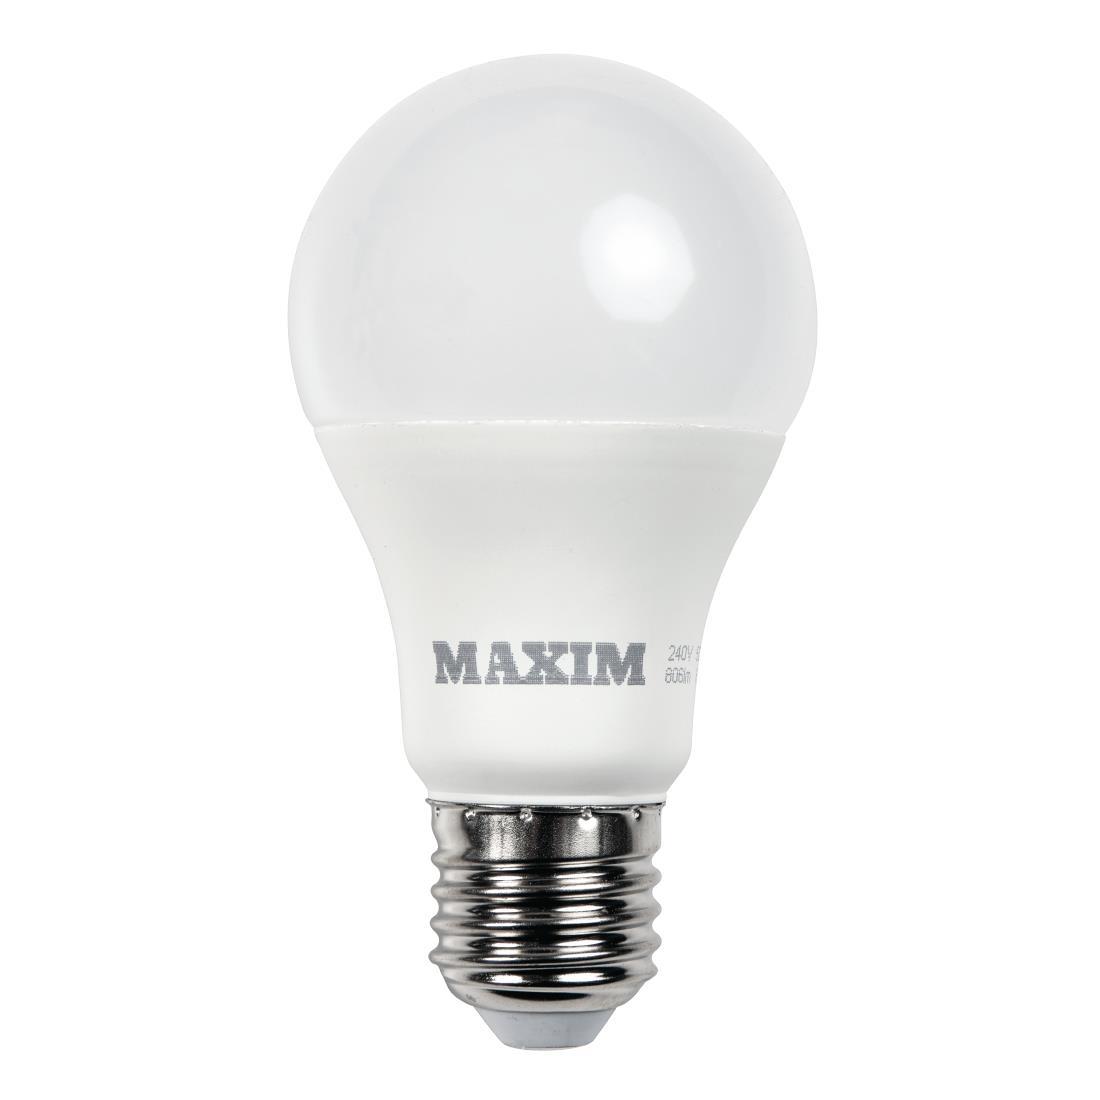 Maxim LED GLS Edison Screw Warm White 10W (Pack of 10) - HC652  - 1